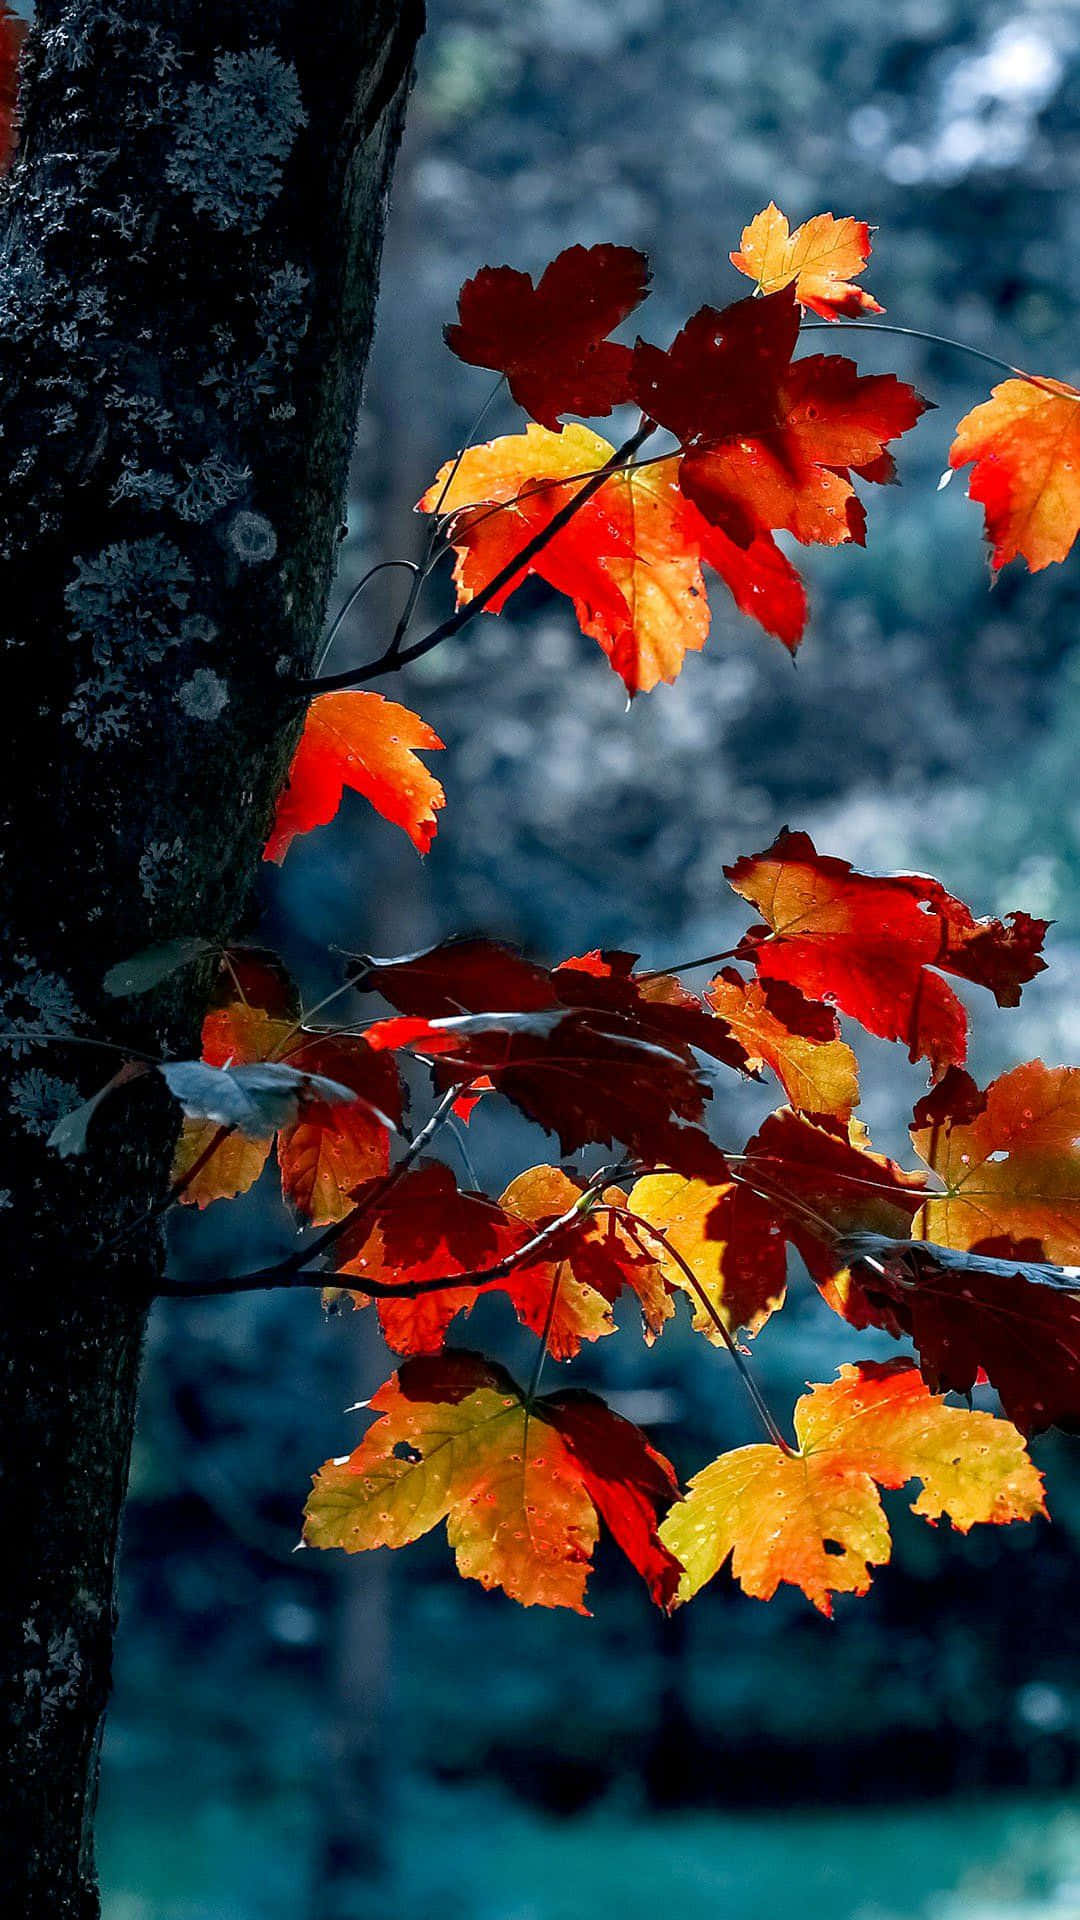 Enchanting Fall Foliage